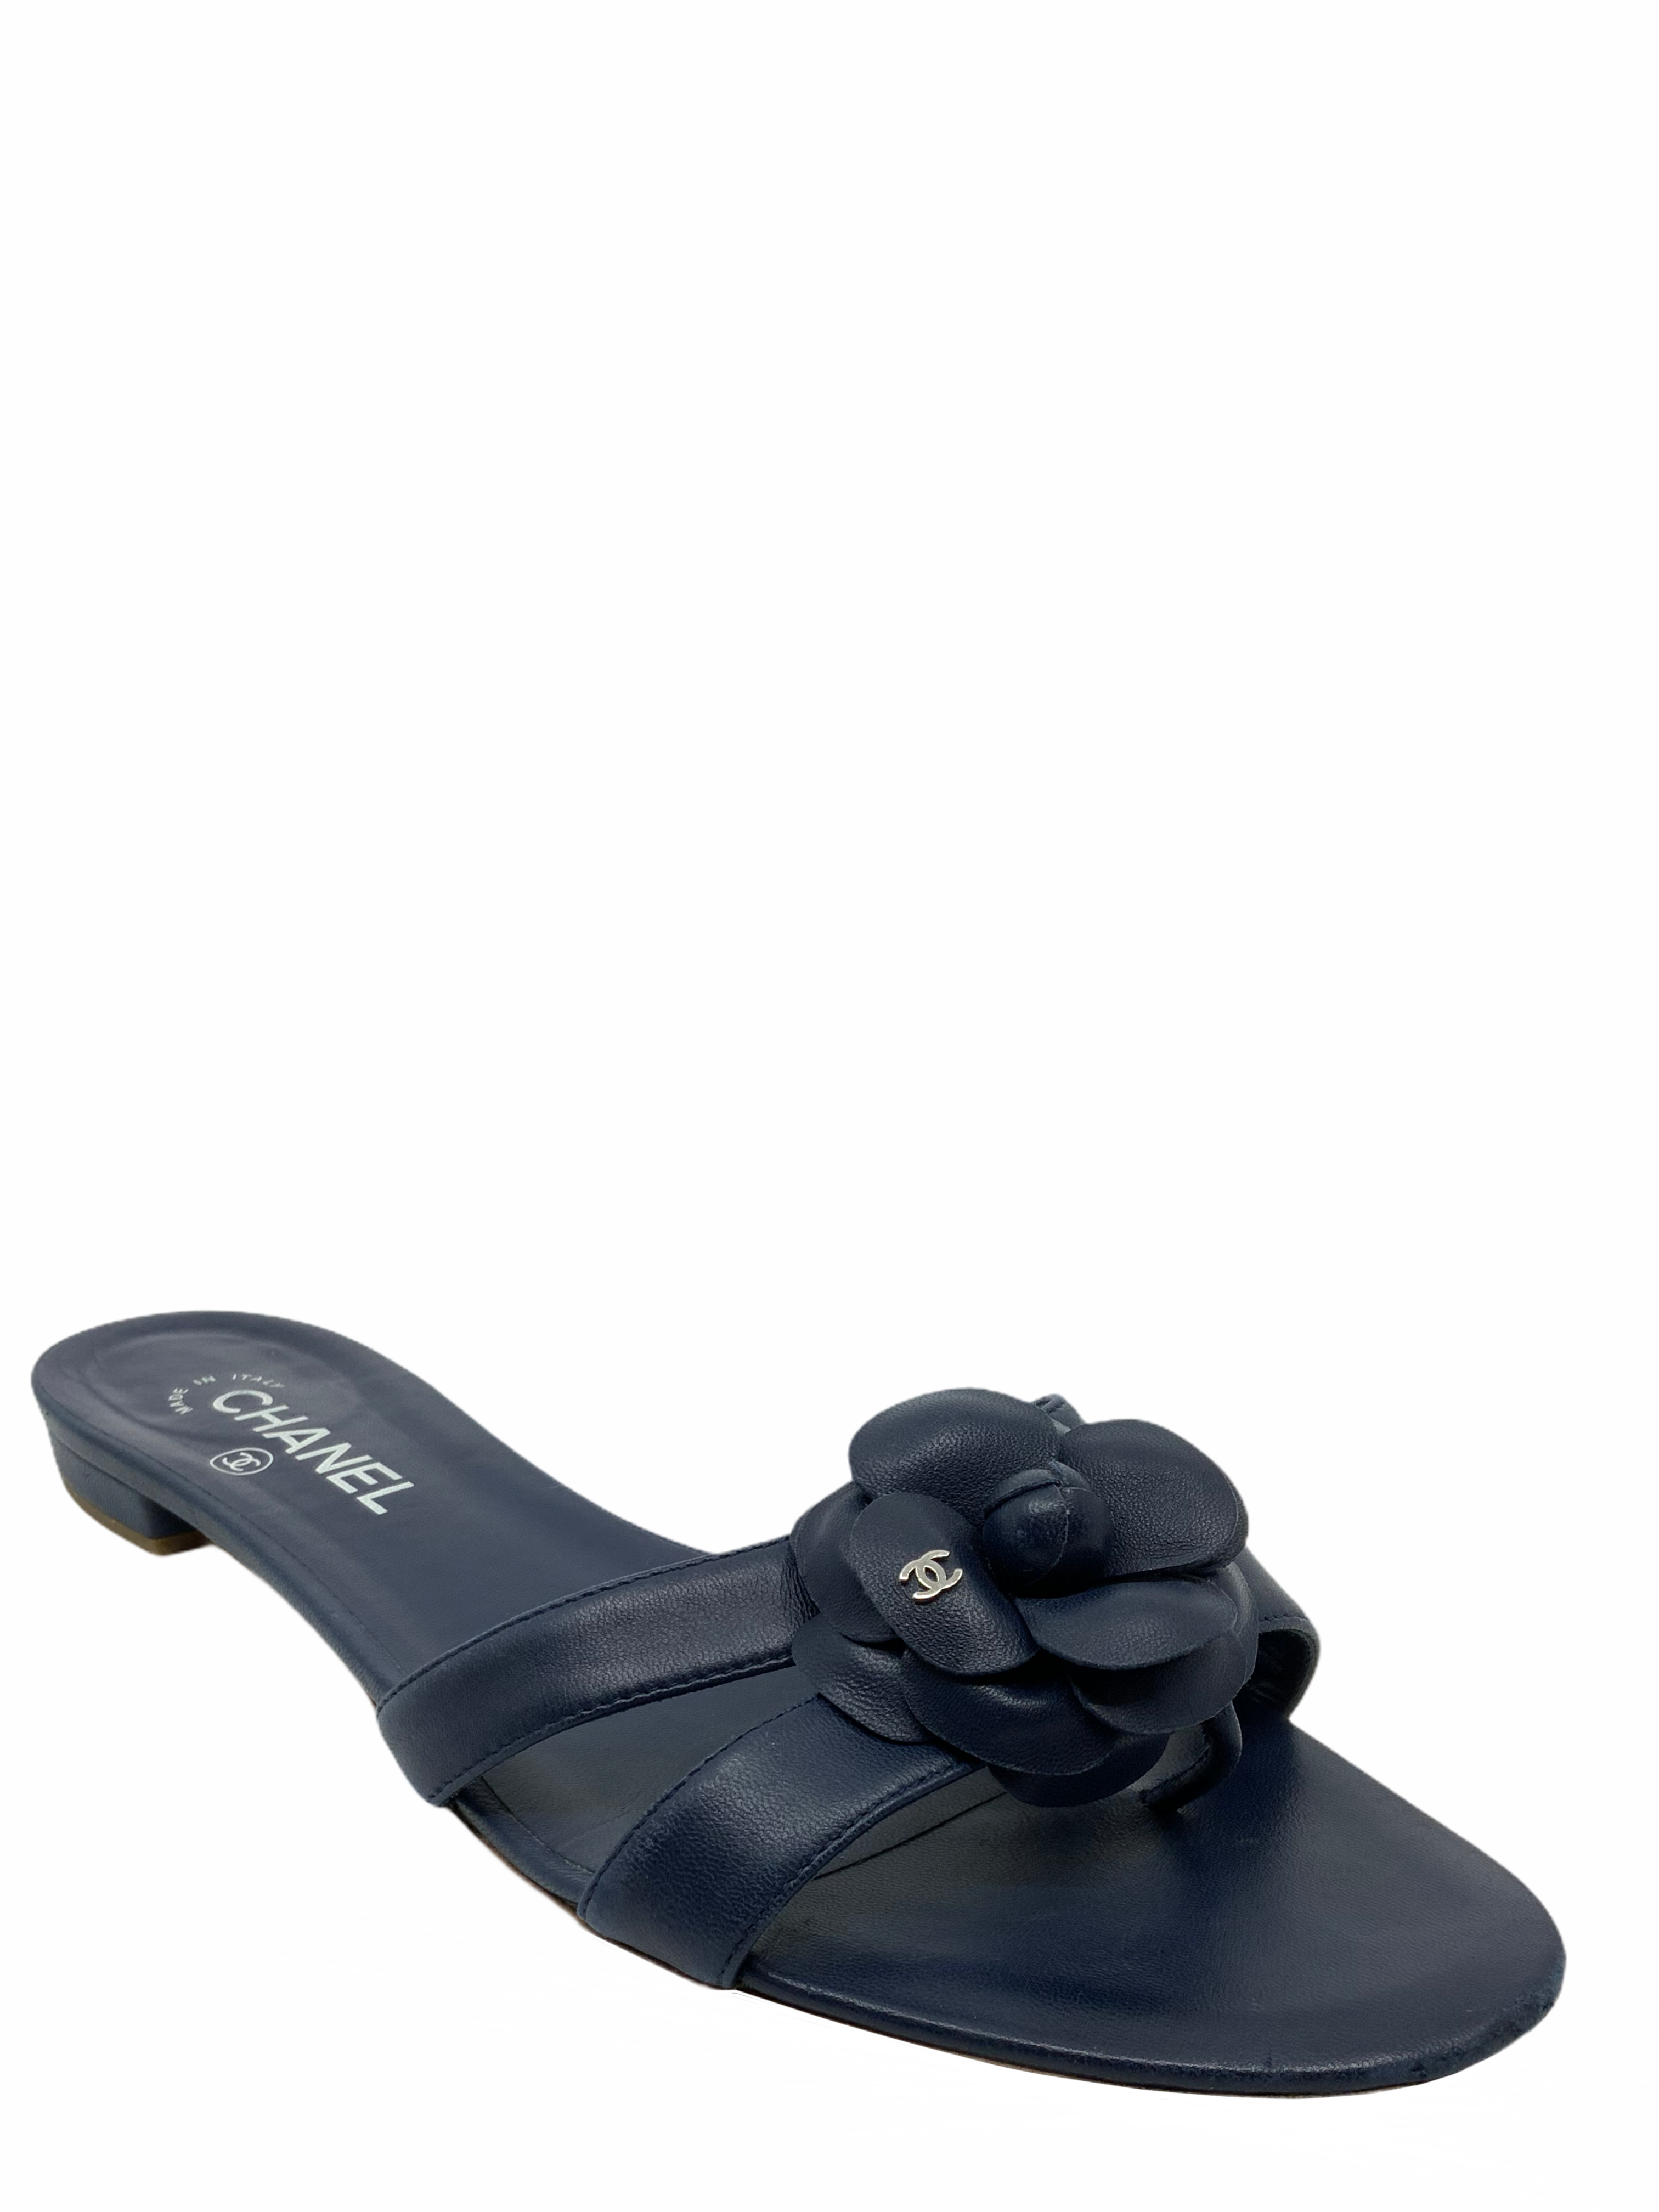 Frances Valentine Magnolia Cloud Thong Sandal Soft Glove Nappa Black/Oyster 6.5